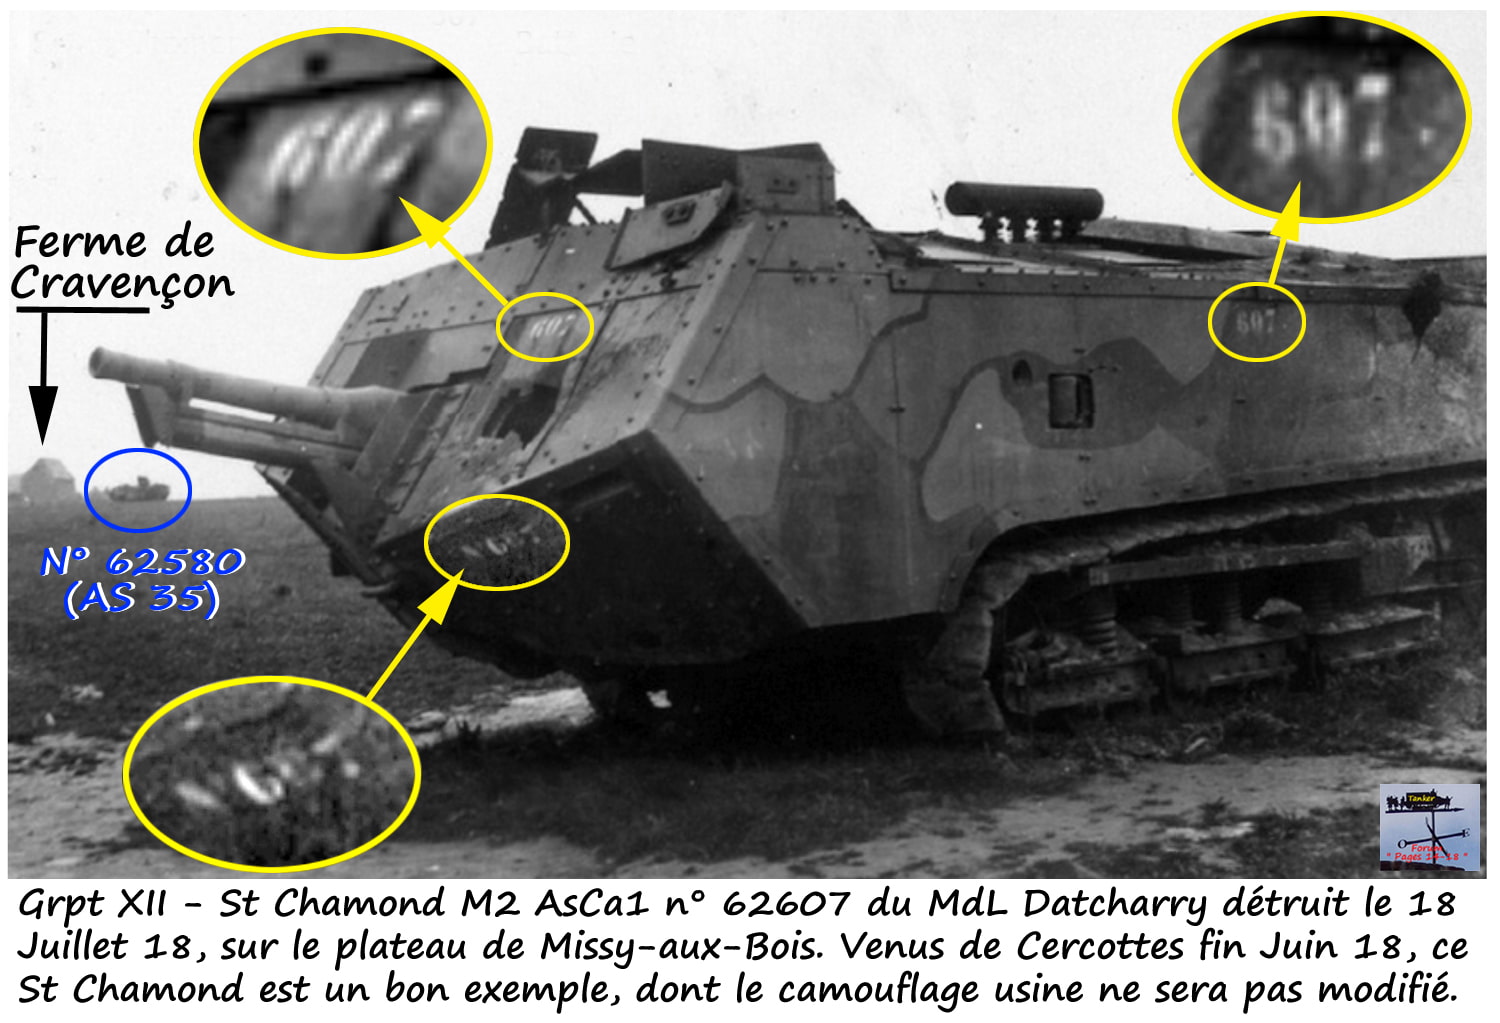 Grpt XII - AS 39 - St Chamond M2 AsCa1 n° 62607 (01)-min.jpg